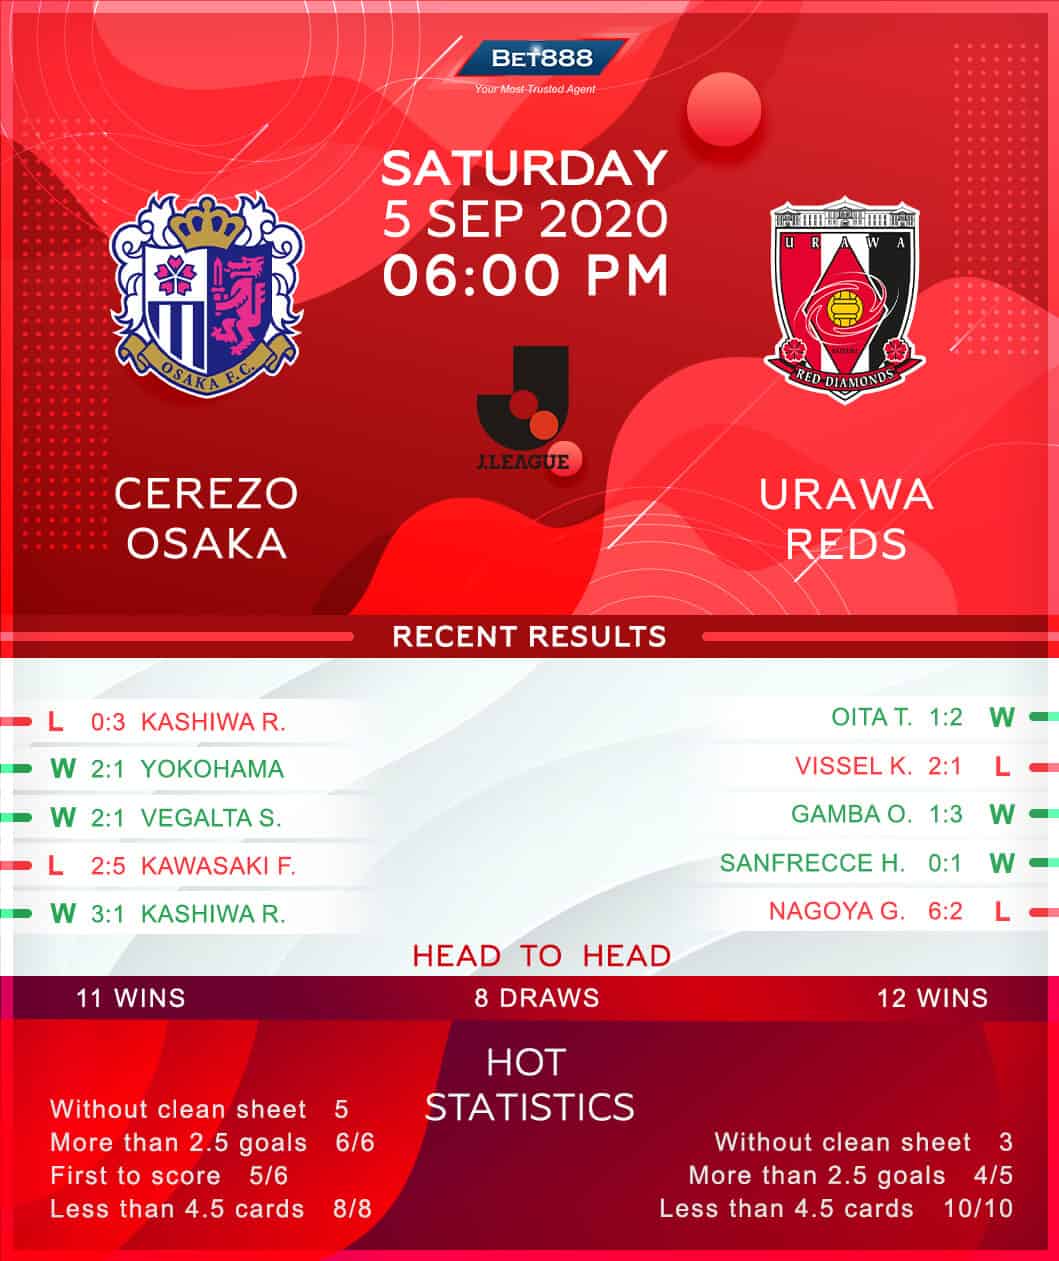 Cerezo Osaka vs Urawa Reds 05/09/20